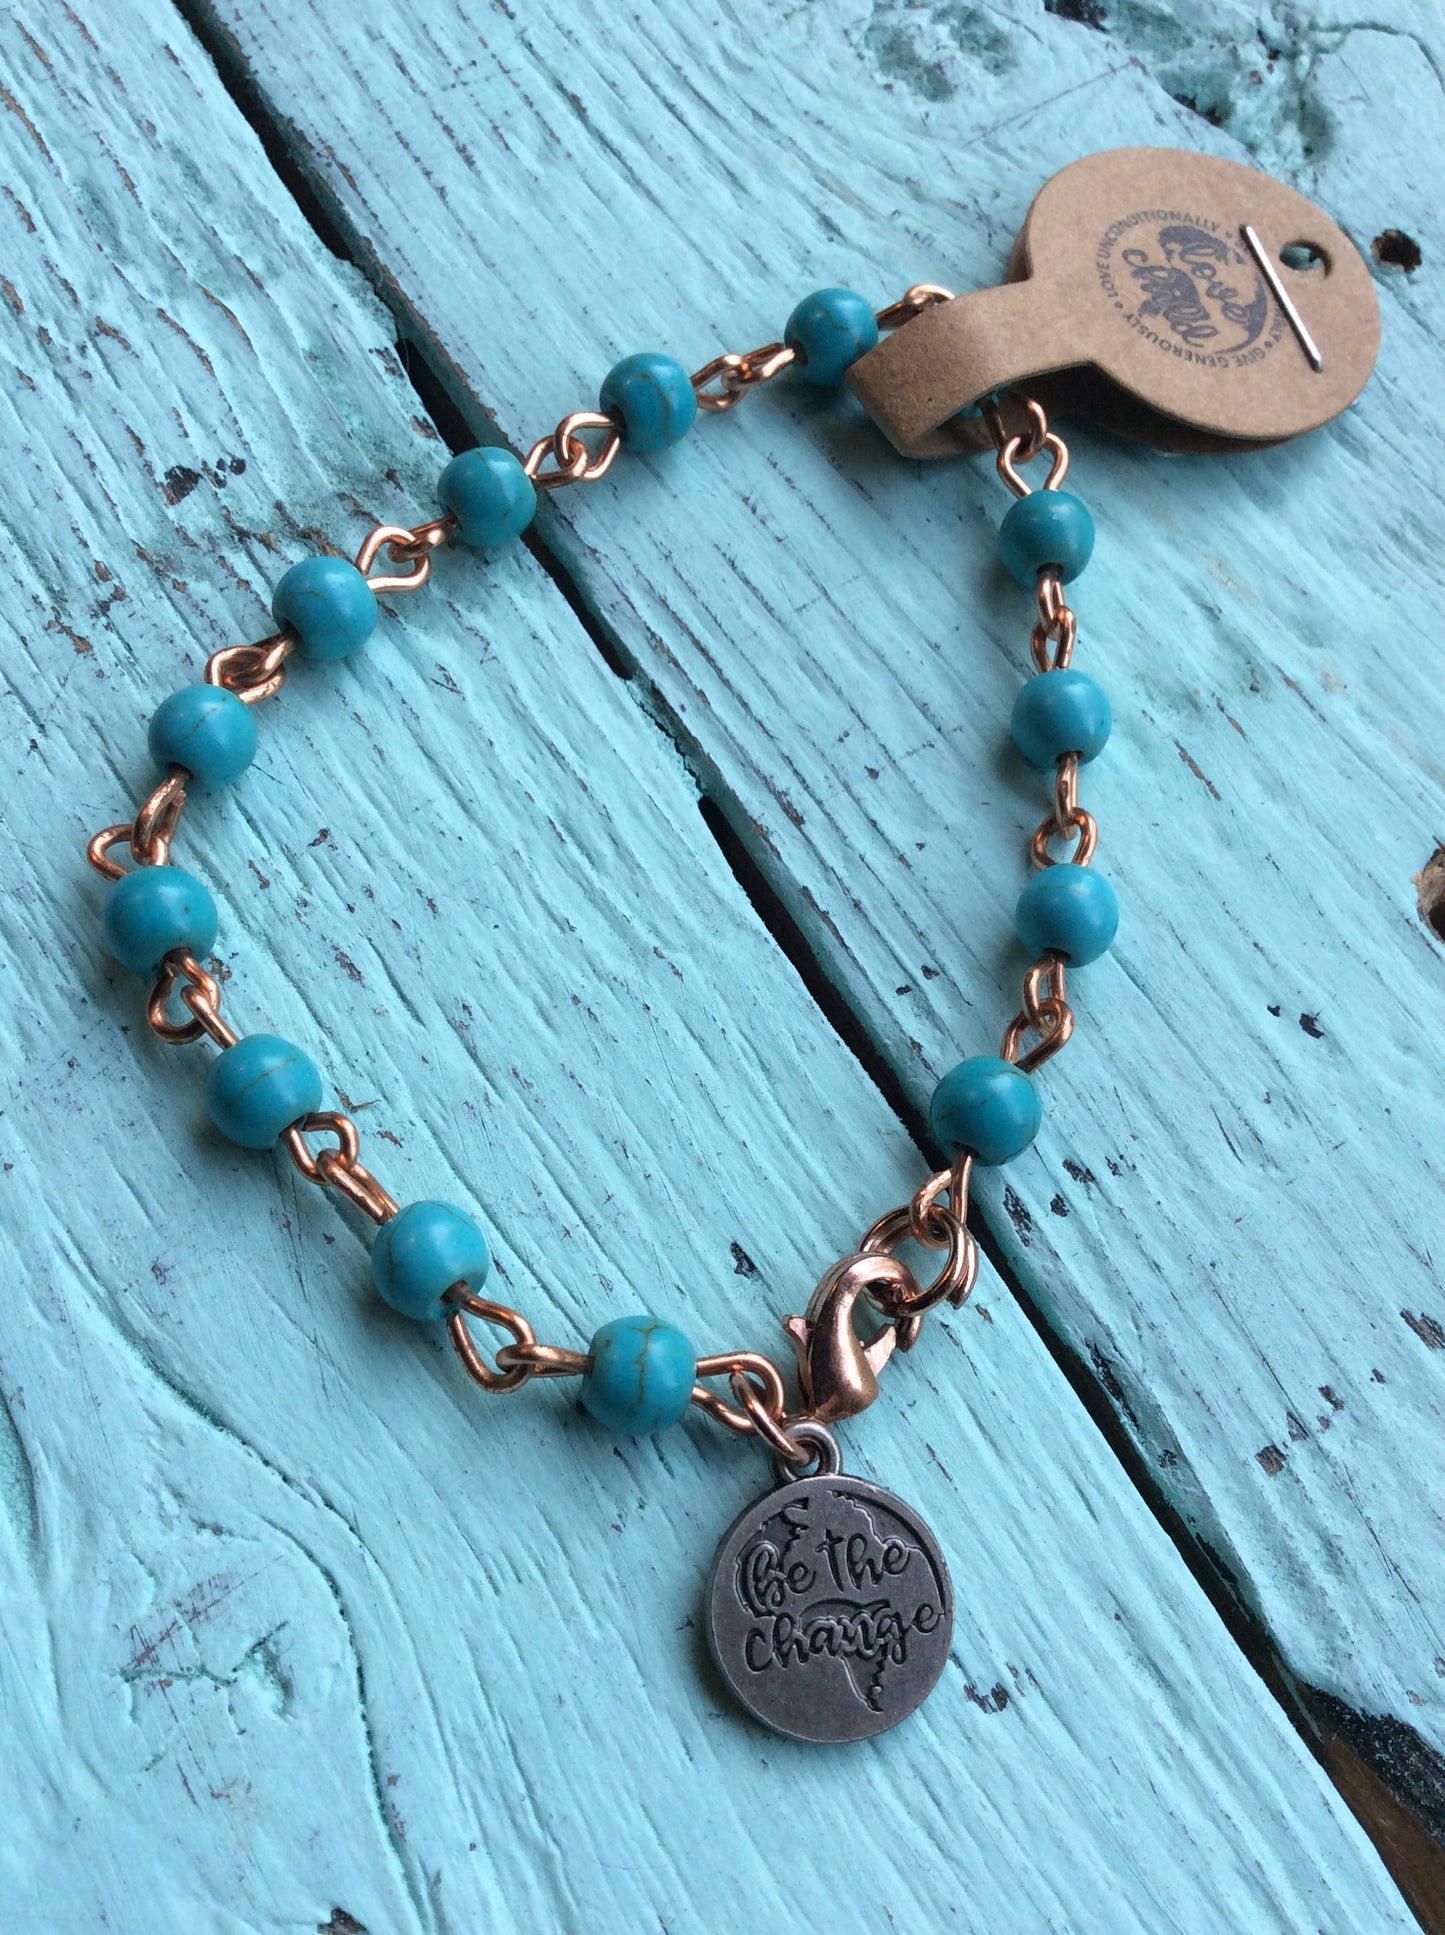 Turquoise Chain Bracelet